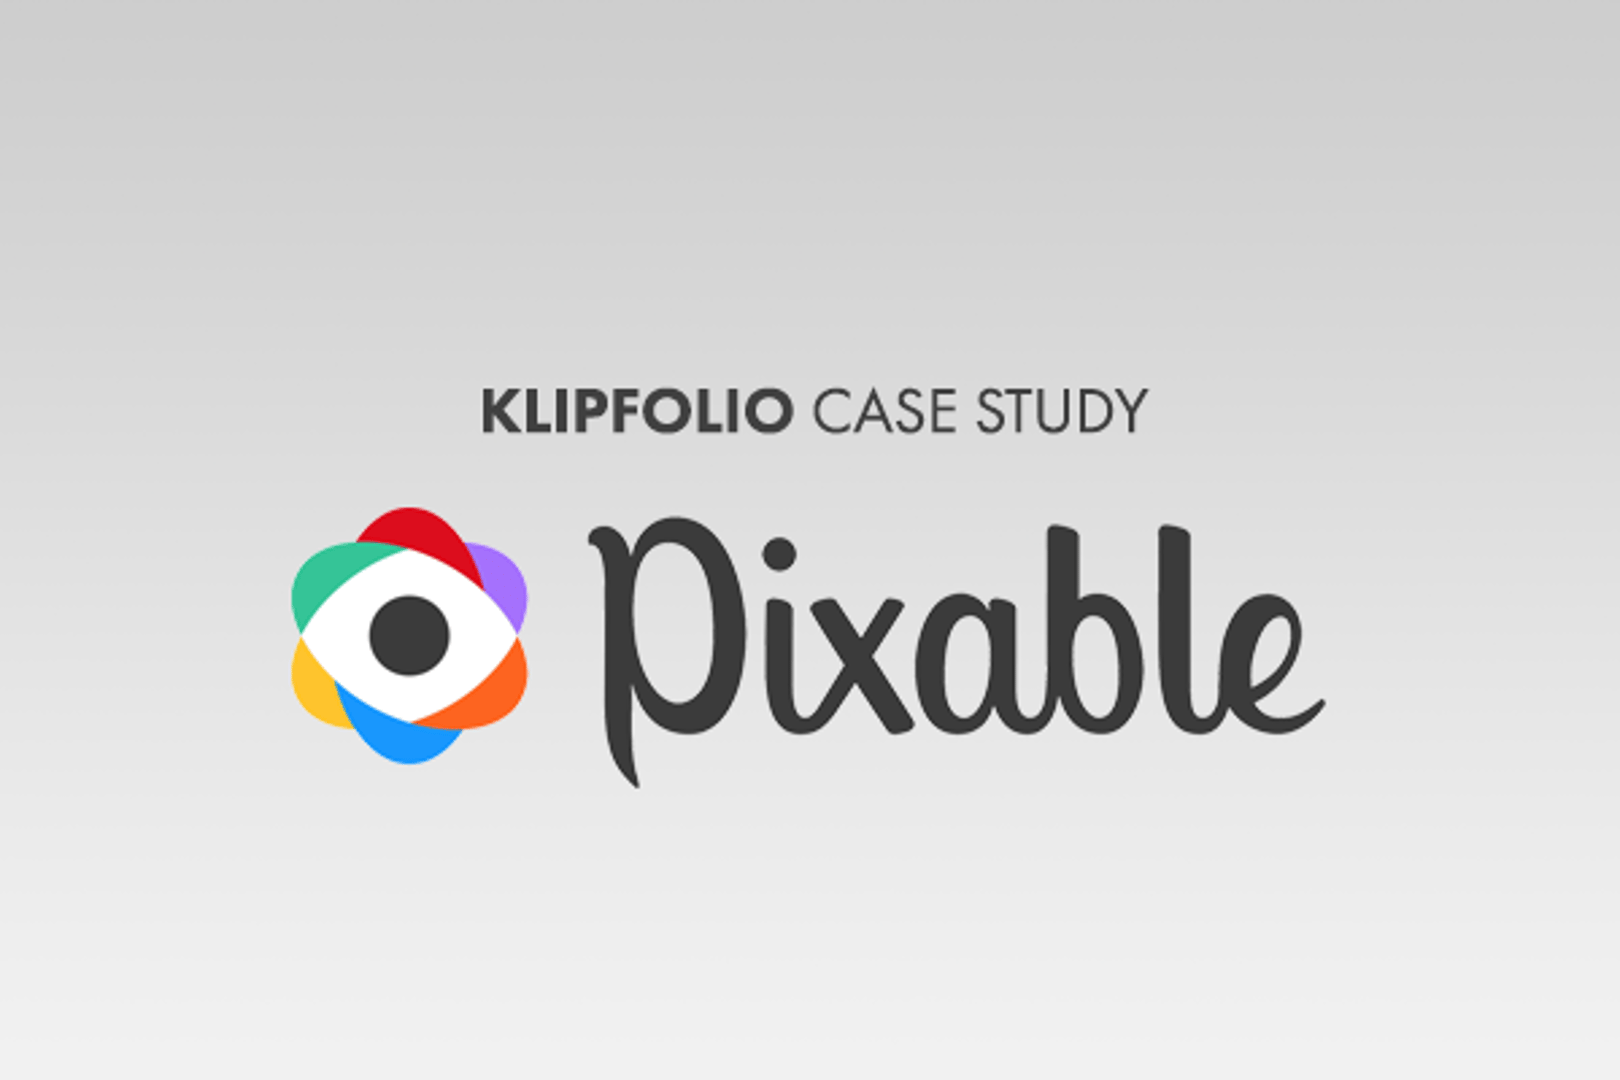 Pixable Klipfolio Case Study